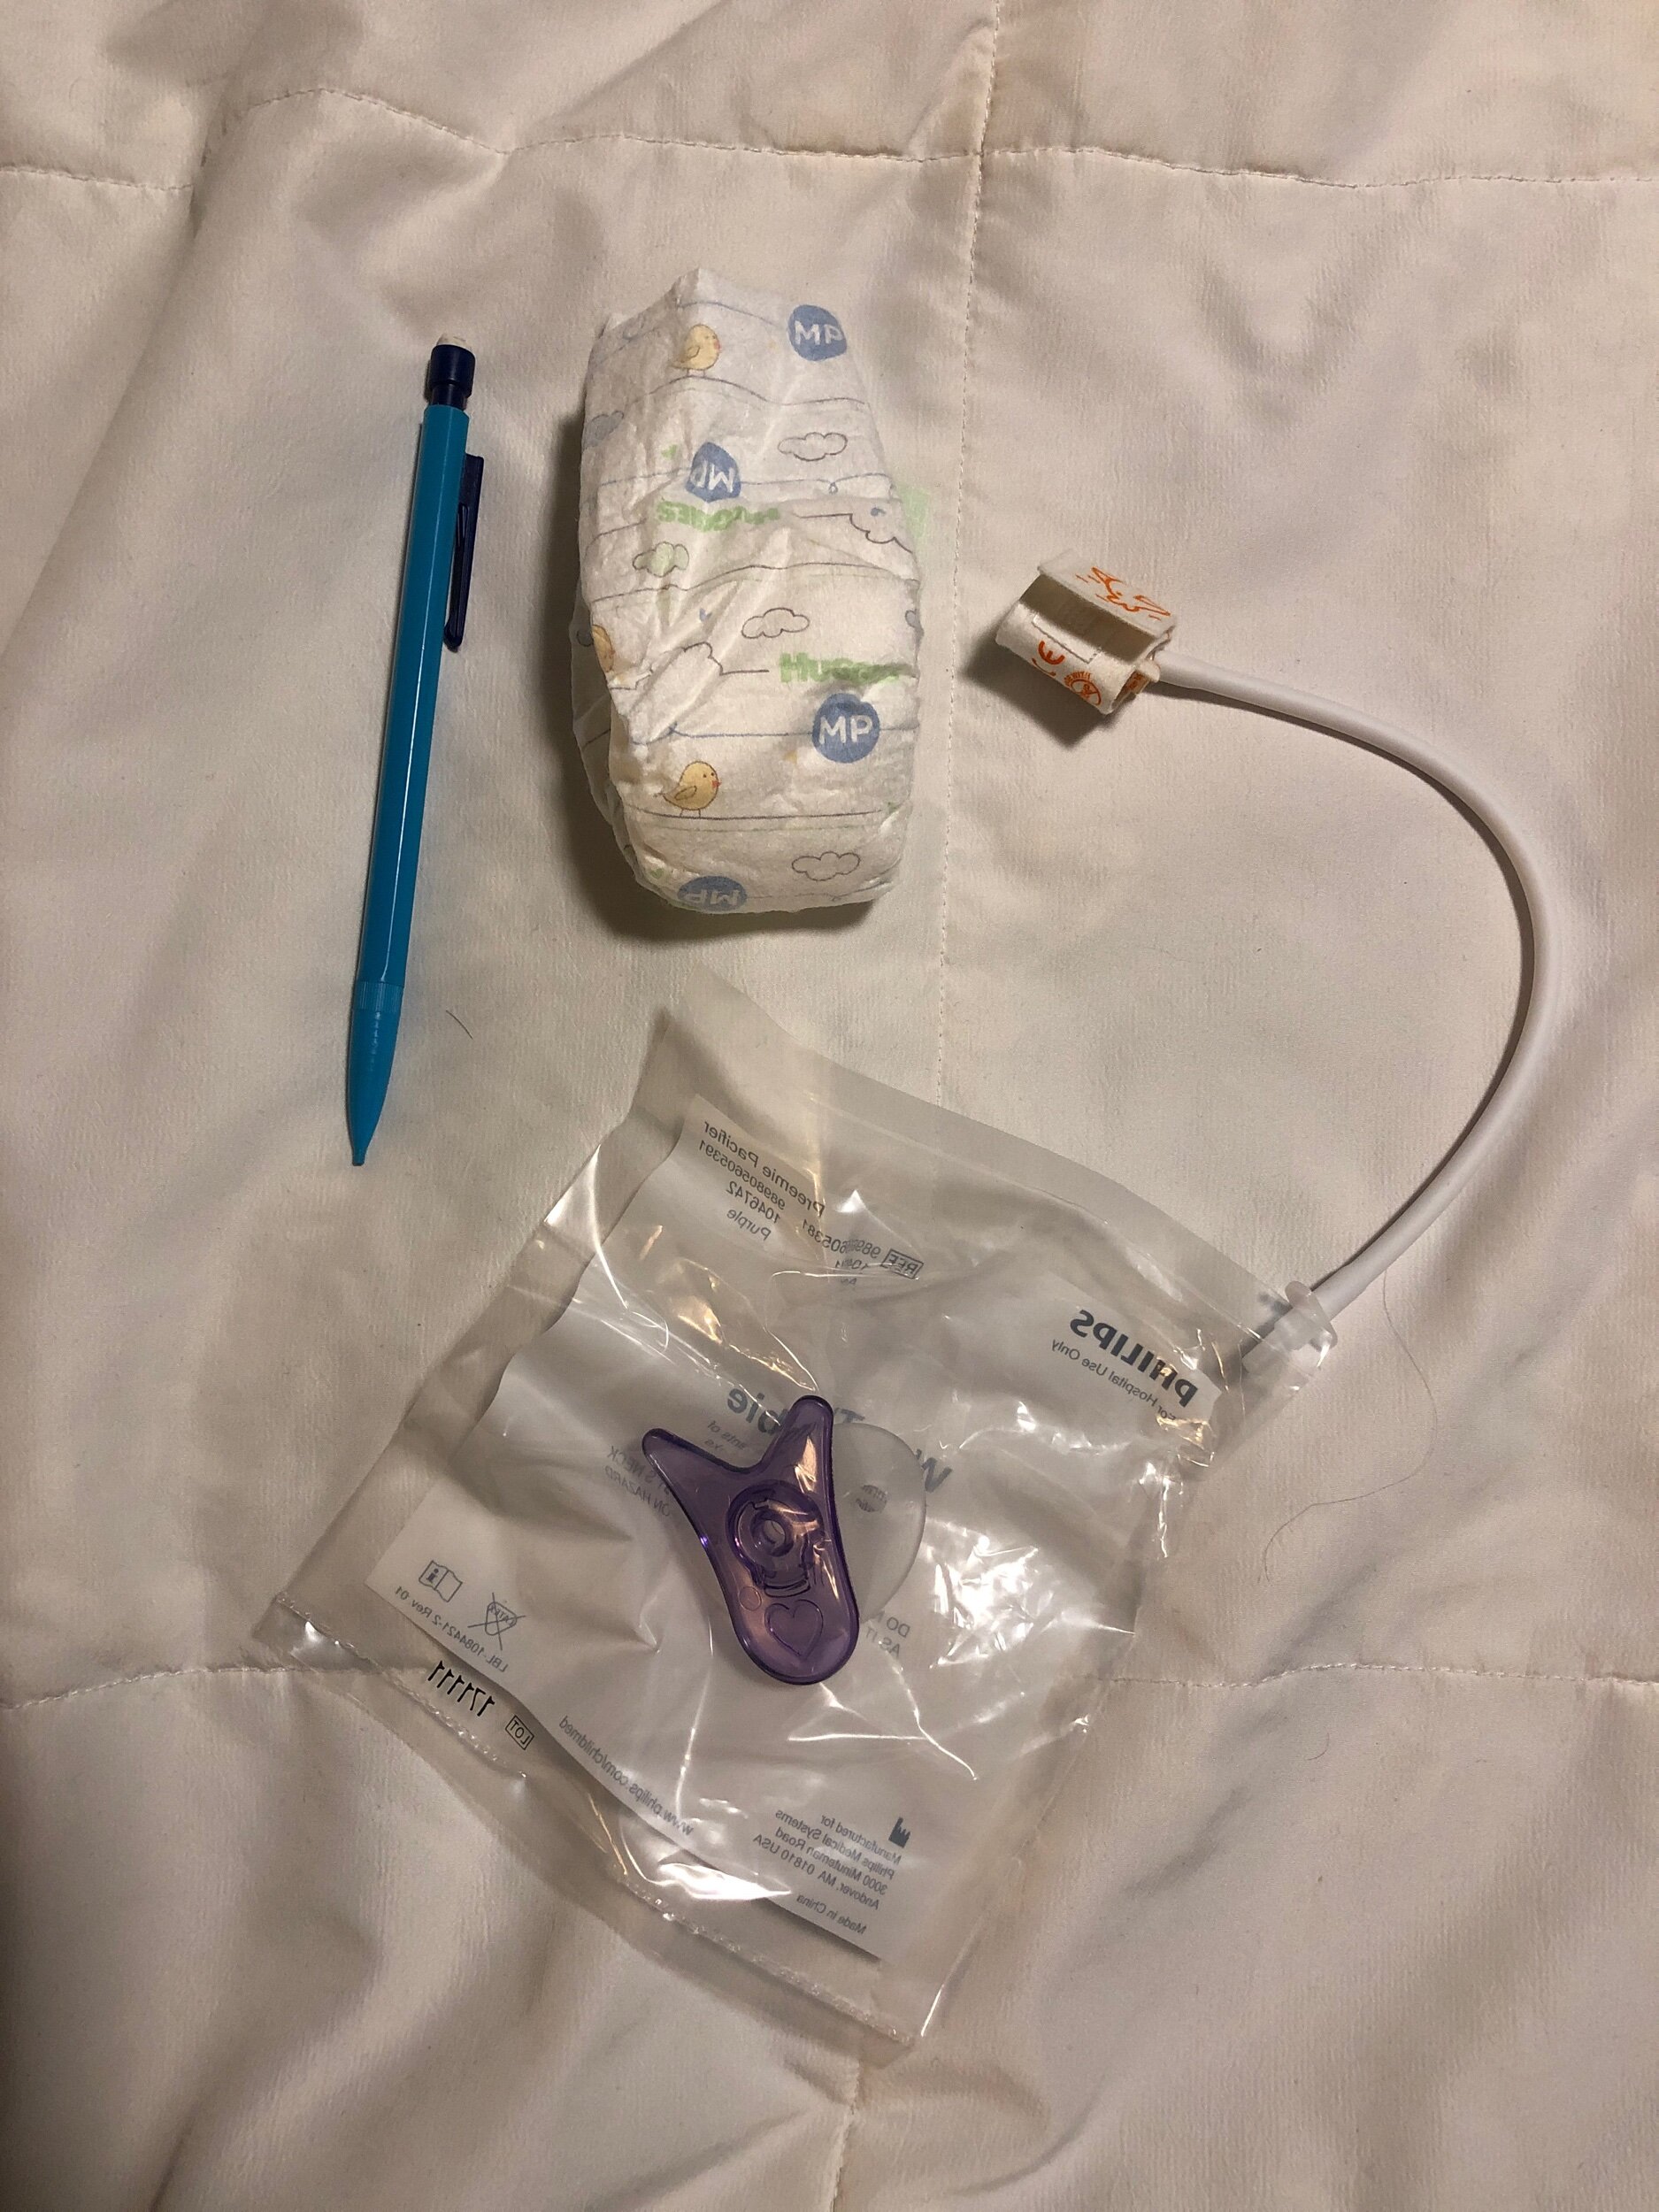 &nbsp;First diaper, blood pressure cuff, and pacifier